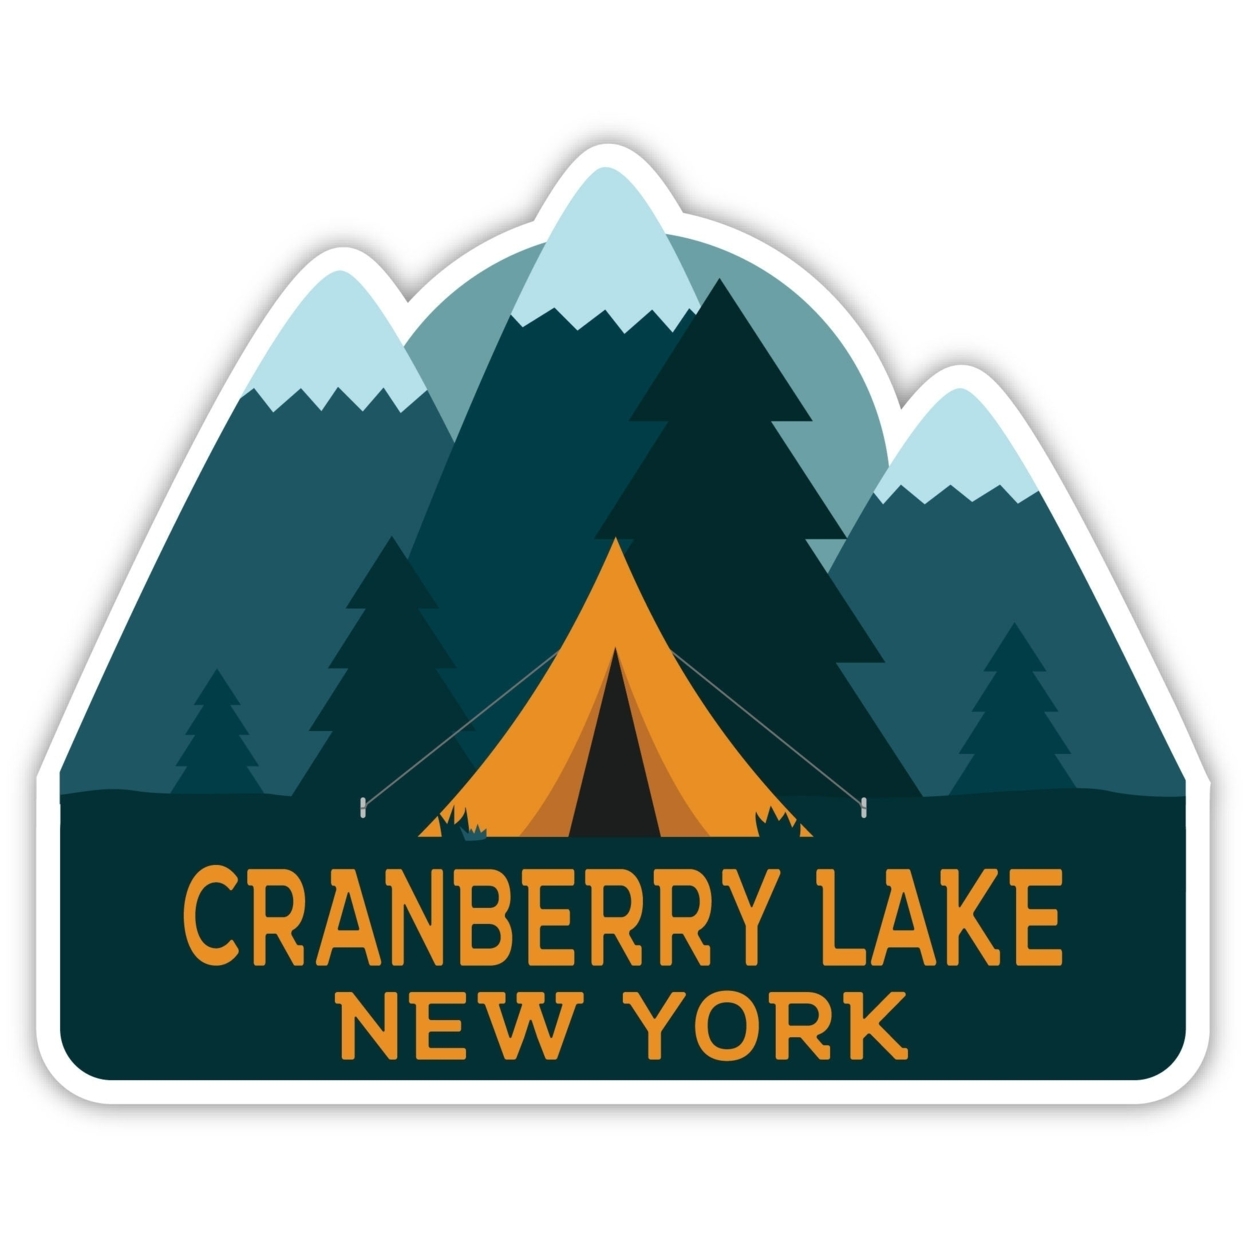 Cranberry Lake New York Souvenir Decorative Stickers (Choose Theme And Size) - Single Unit, 4-Inch, Adventures Awaits